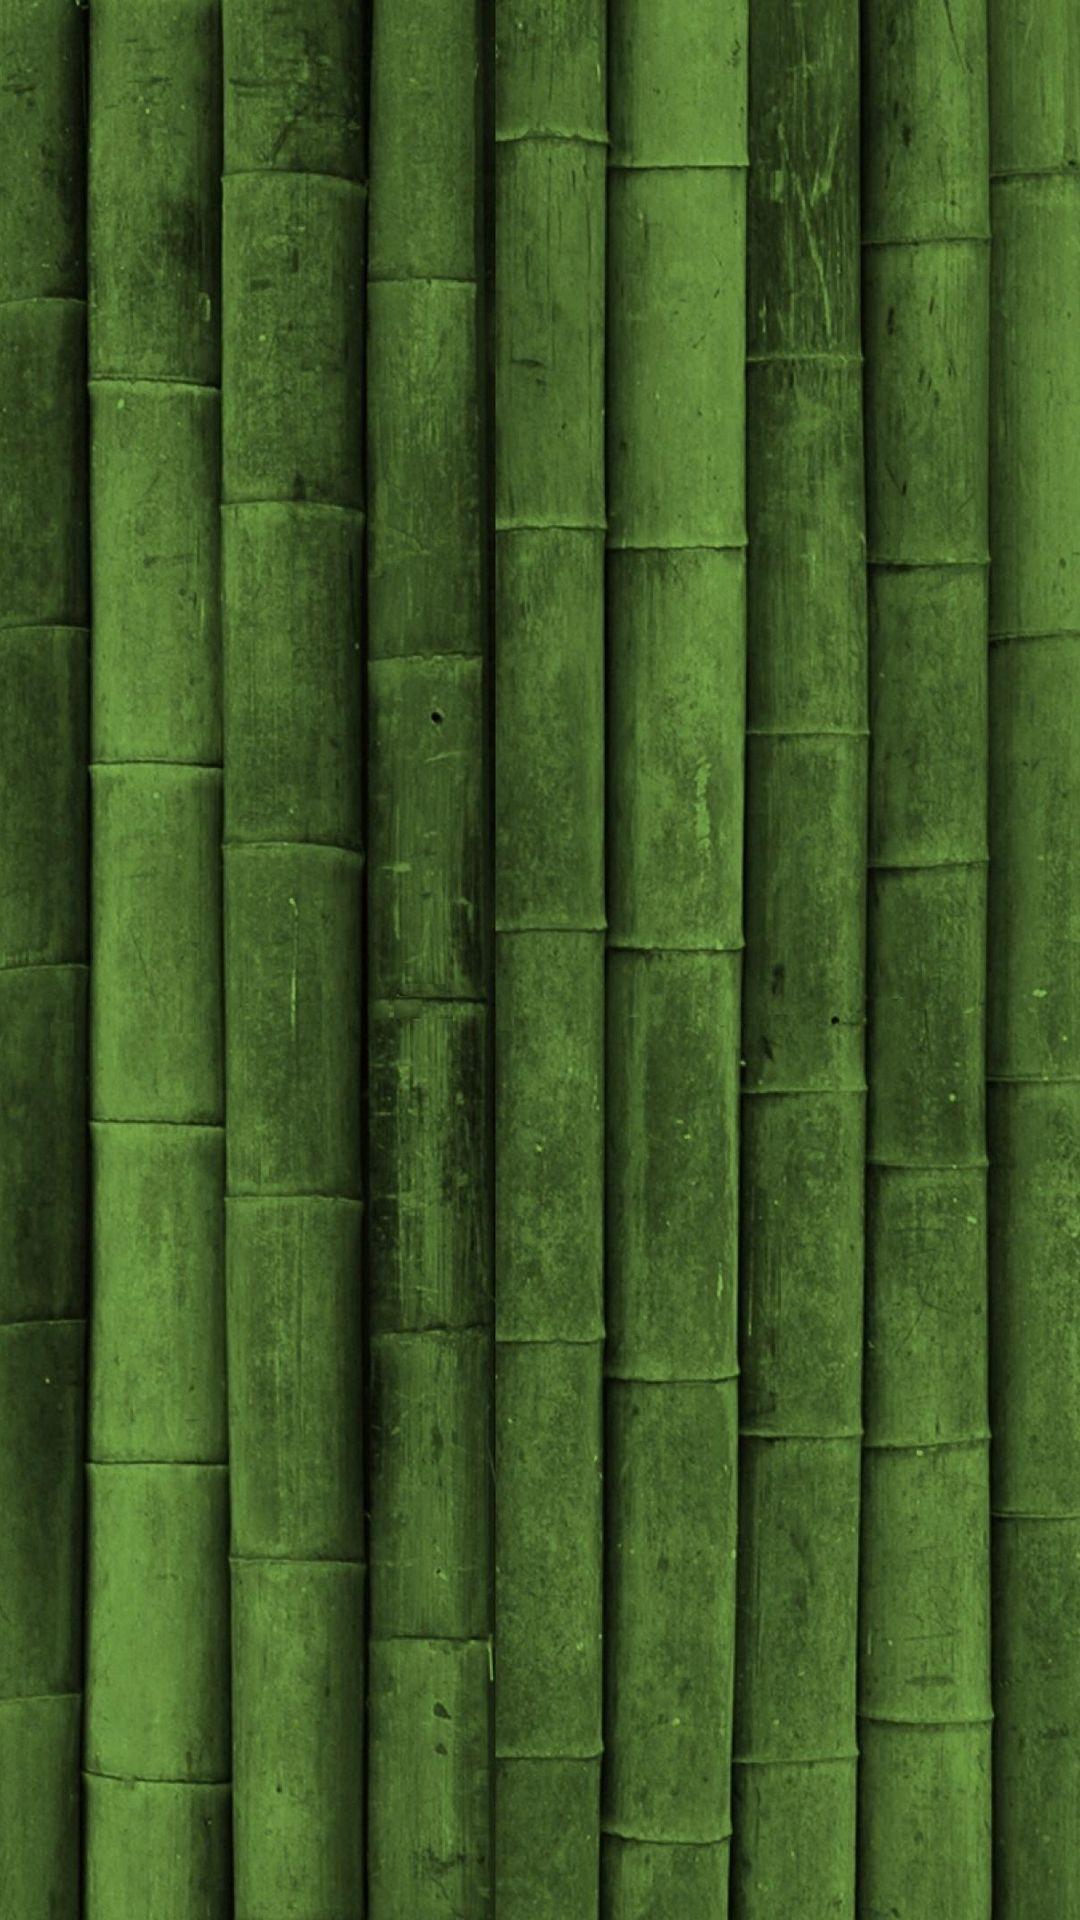 Bamboo Texture iPhone Wallpaper HD